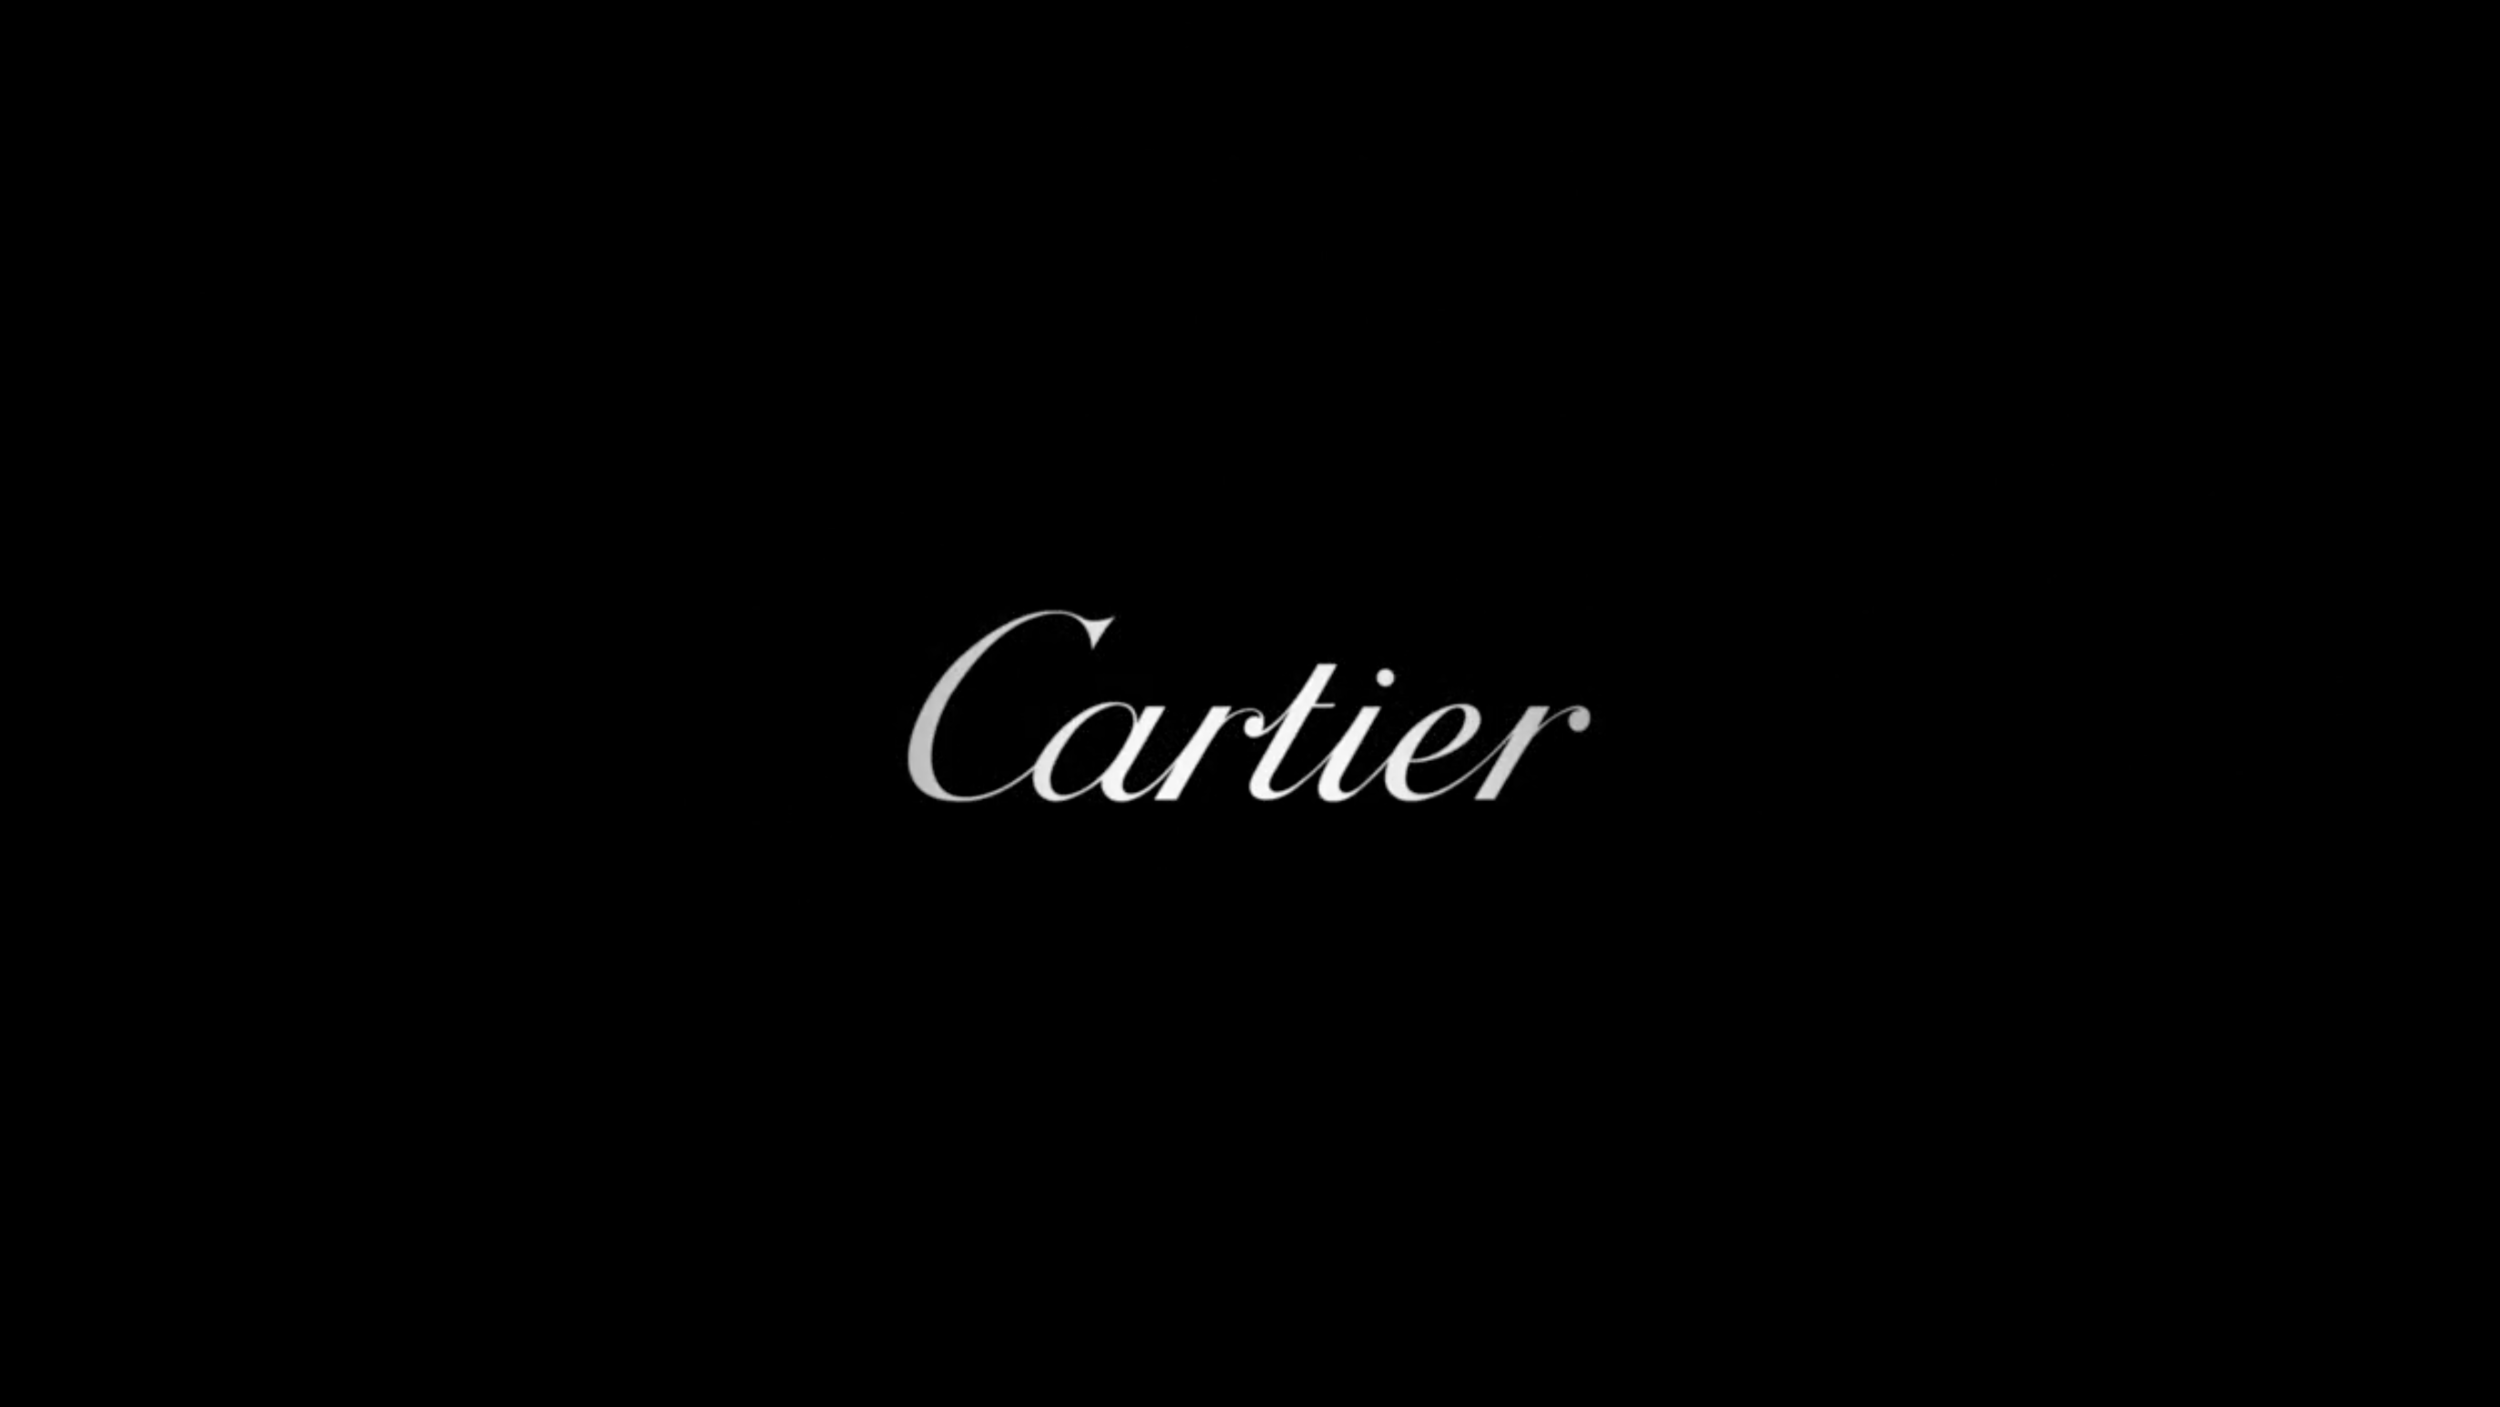 Cartier Russia — Allan Jamieson Wright